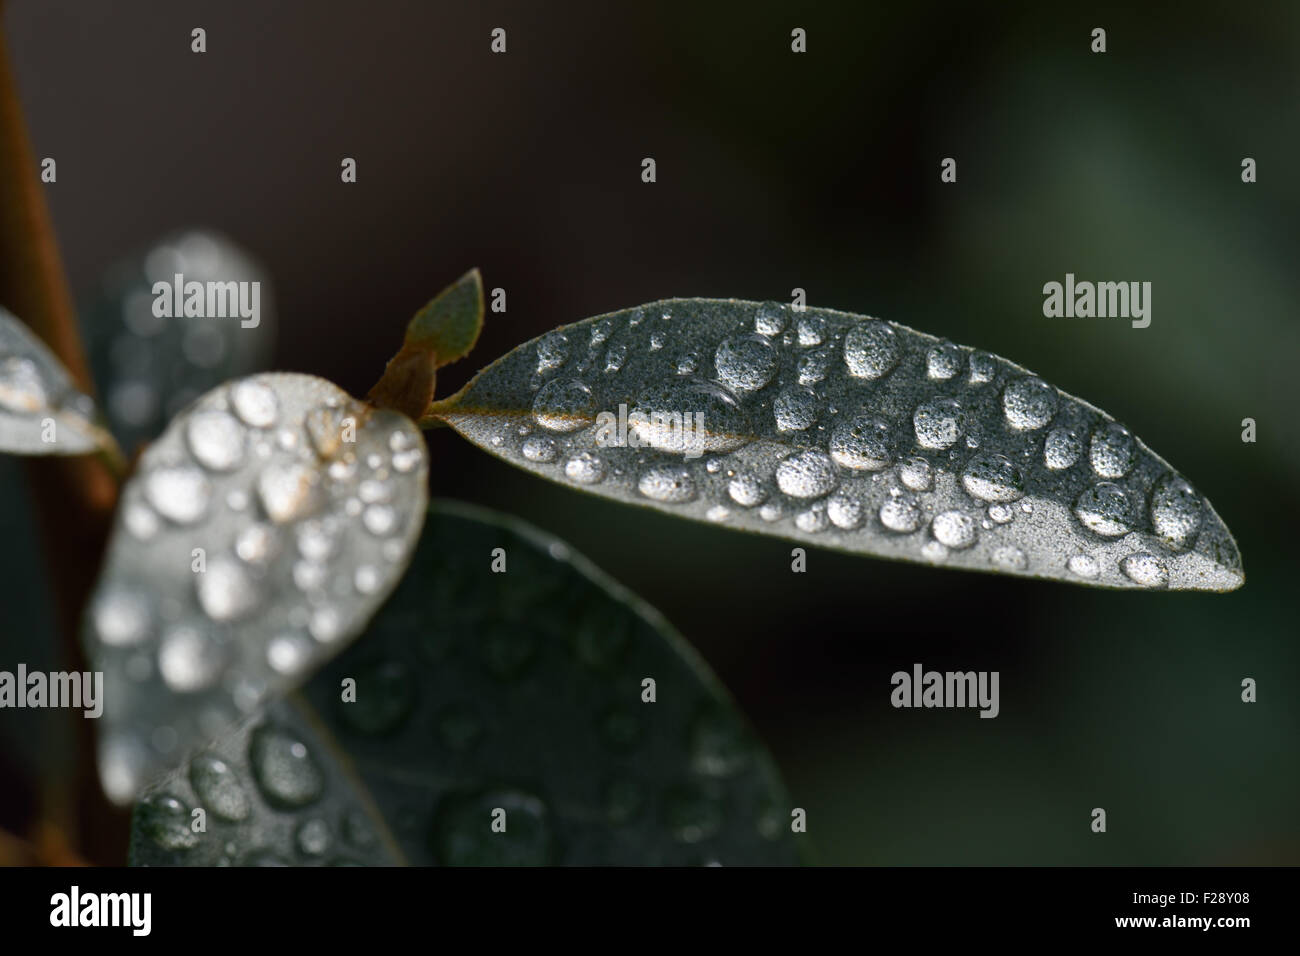 Rain water drops sitting on the grey green leaves of Eleagnus angustifolia 'Quicksilver' Stock Photo